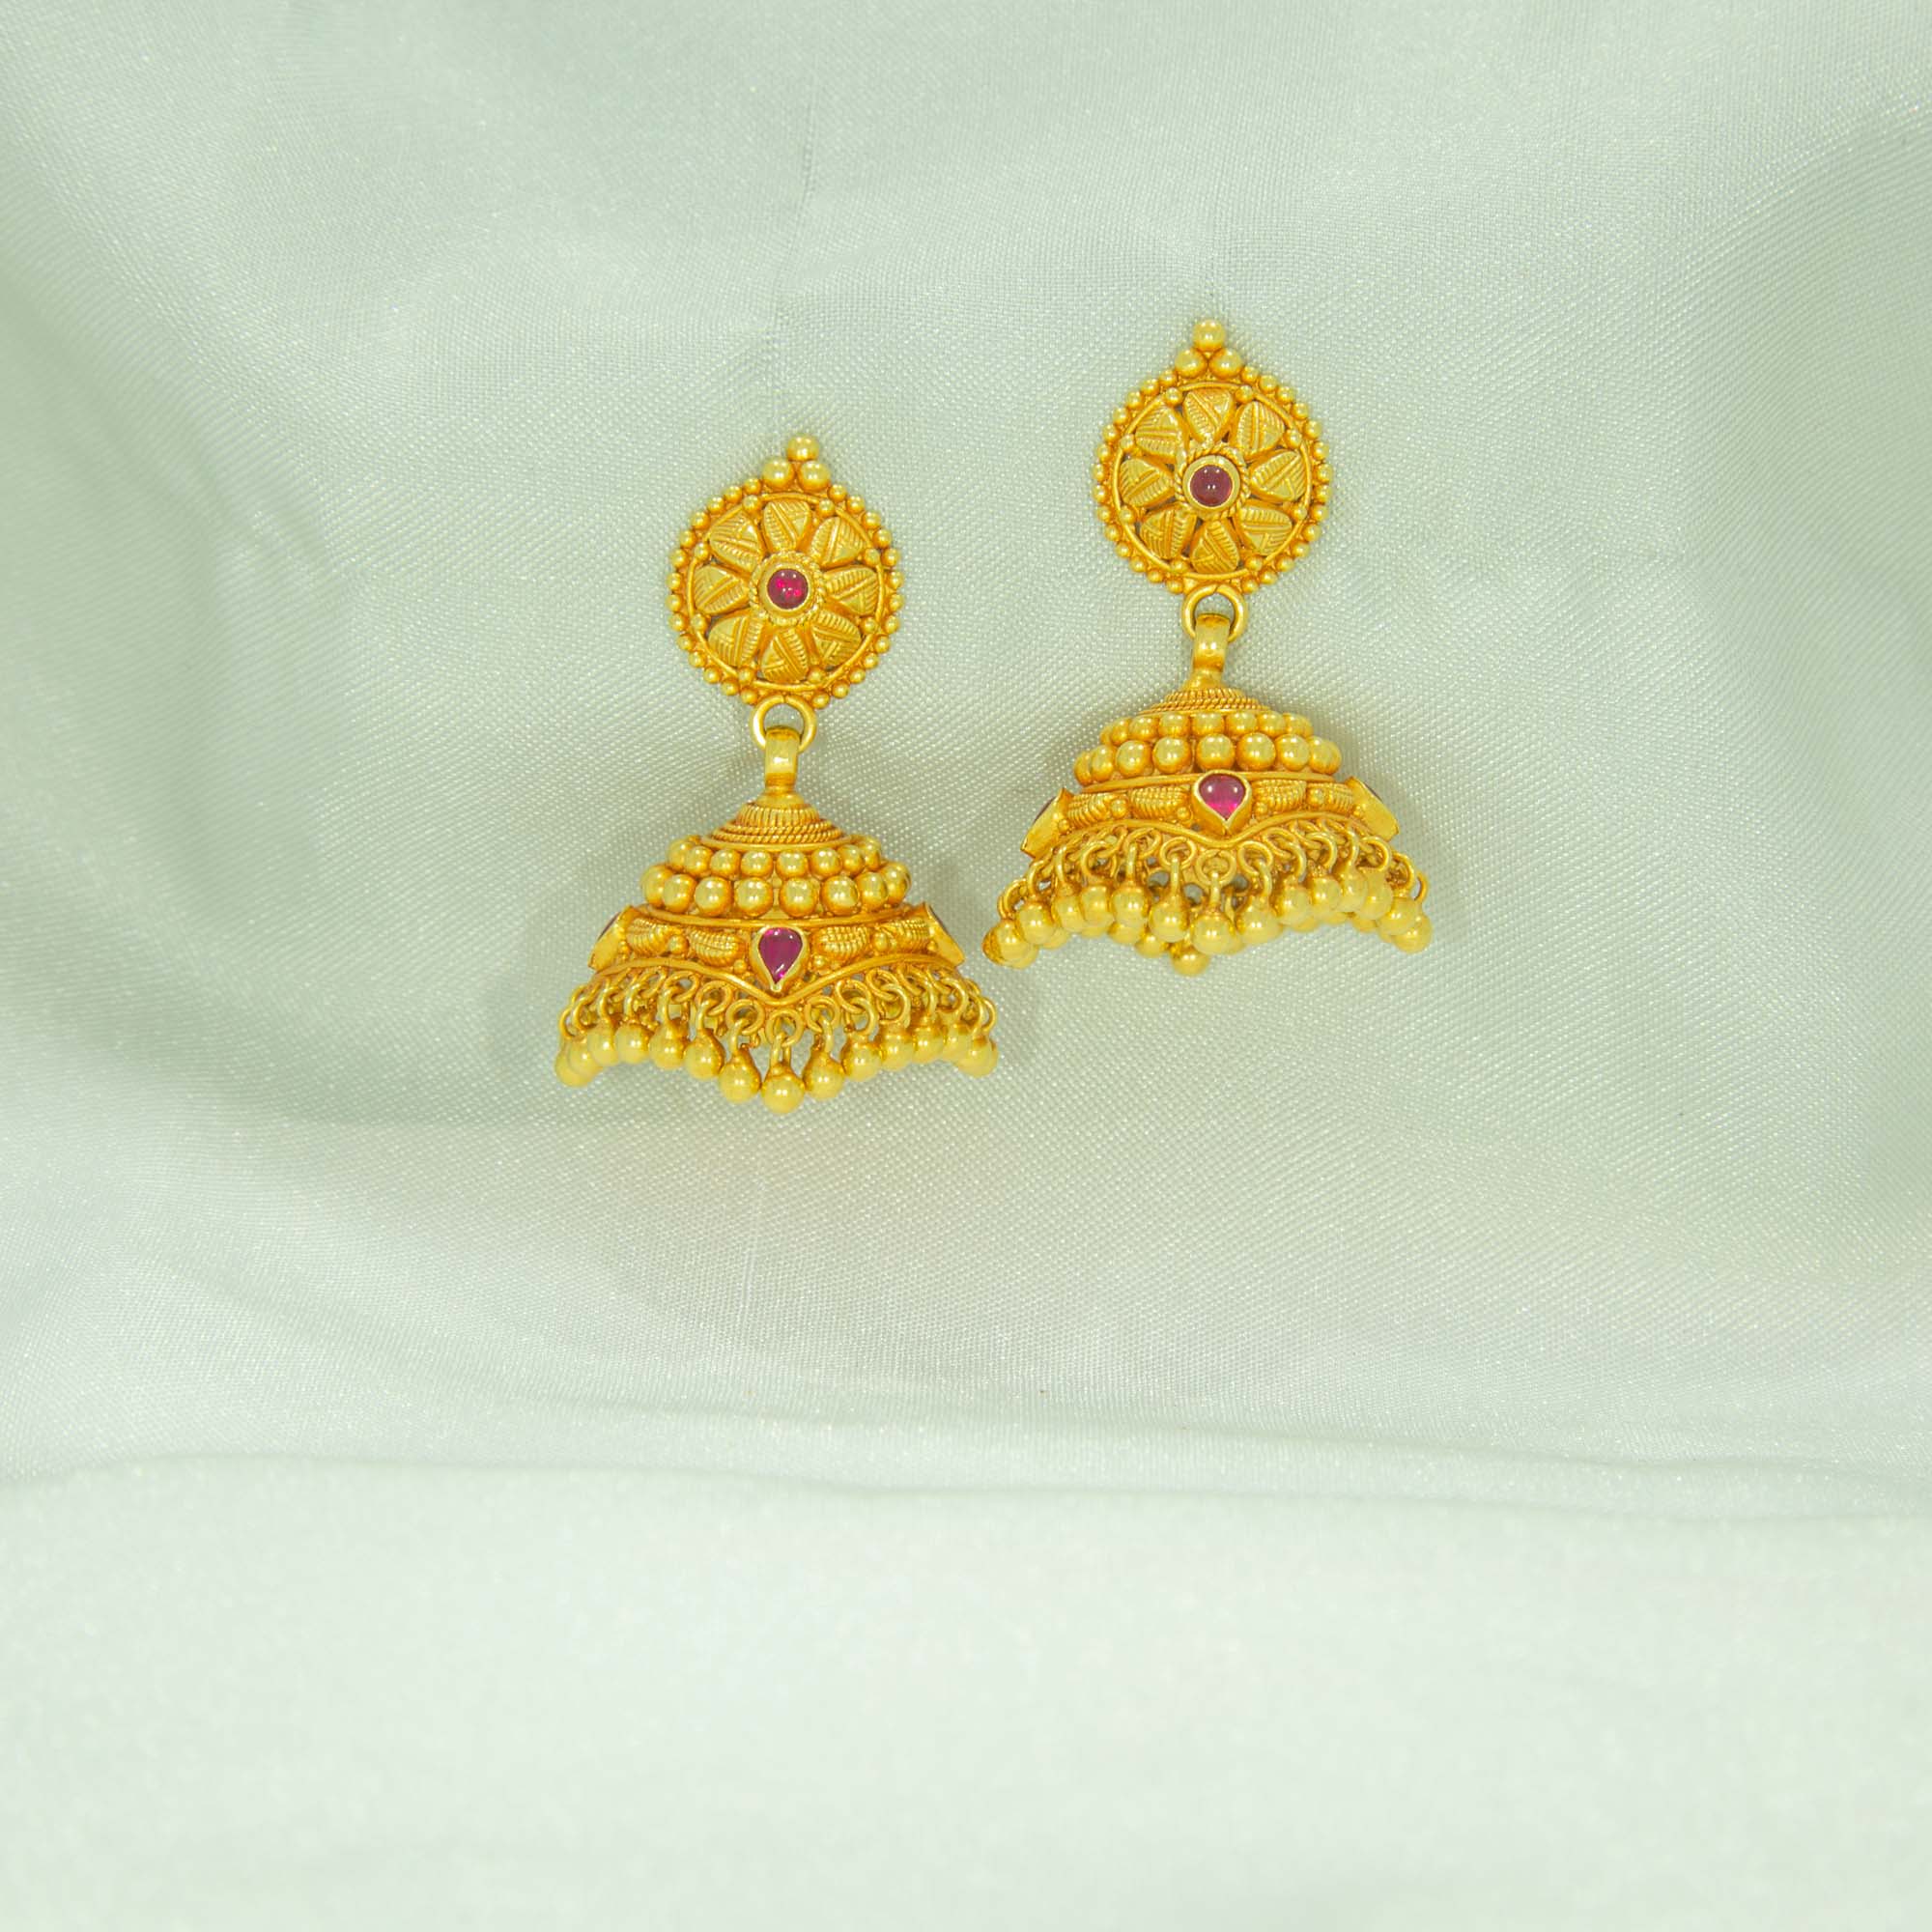 Buy quality Umbrella design gold jhumka earrings in Pune